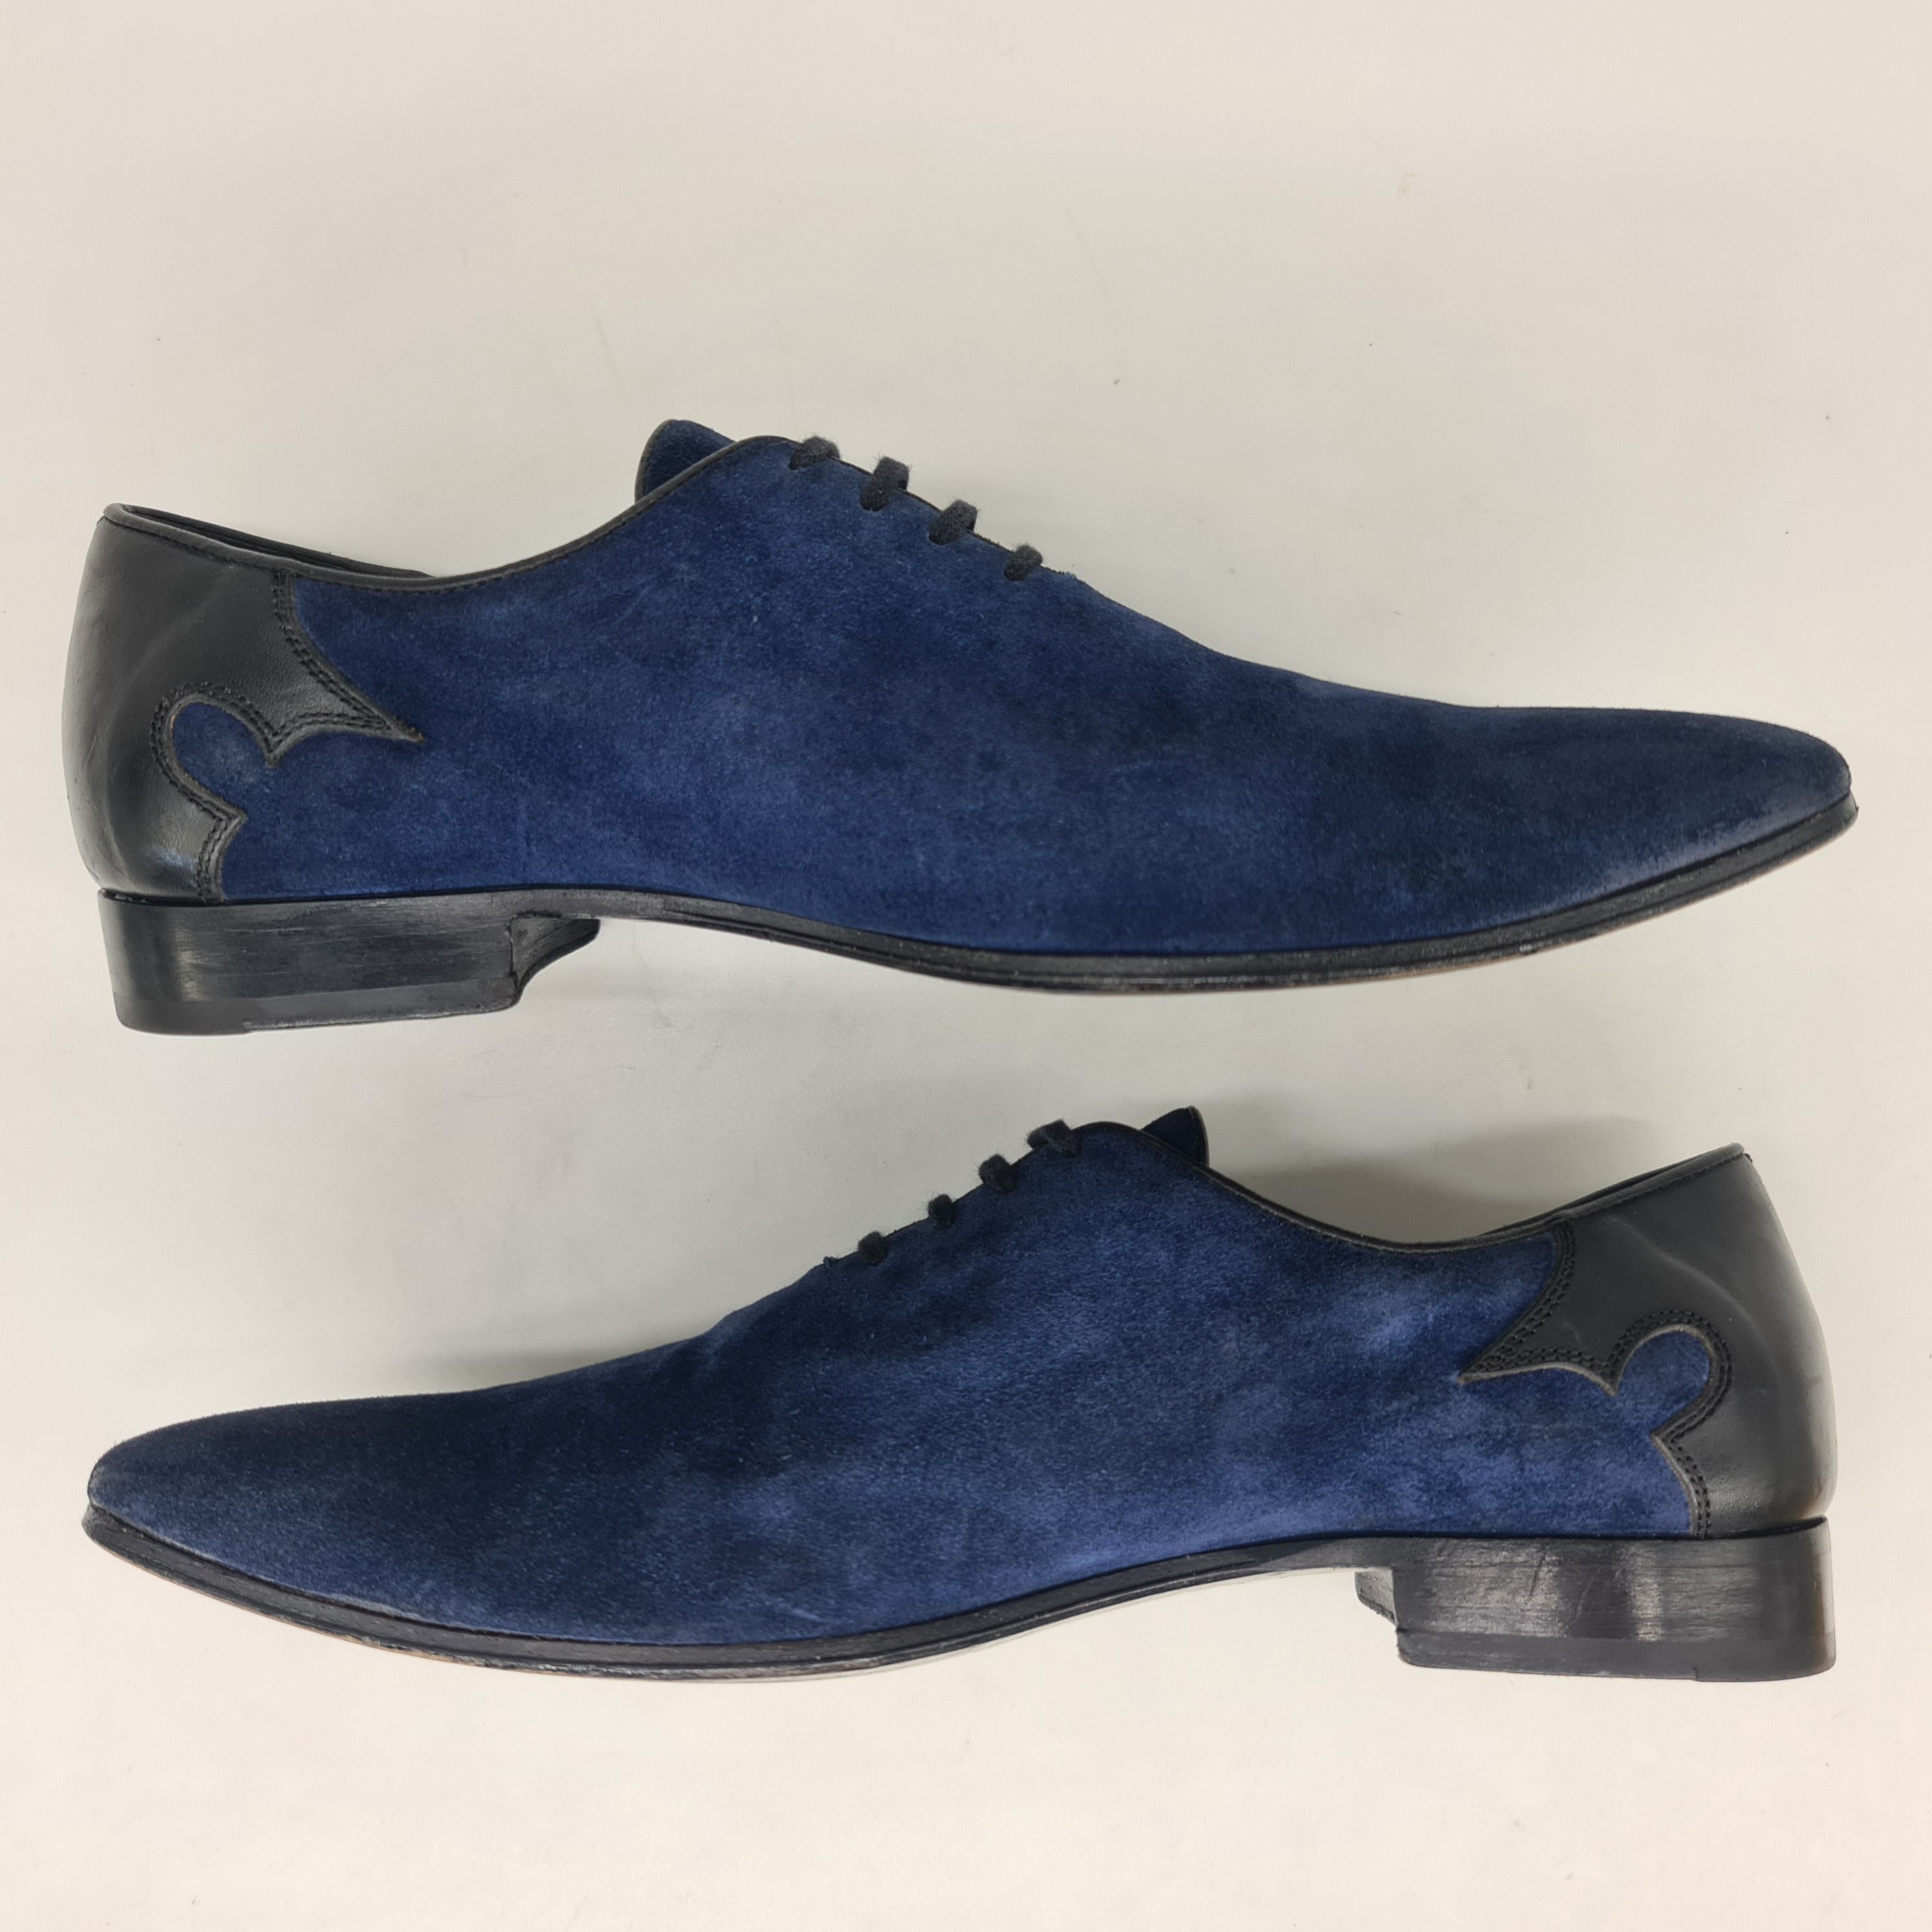 Haider Ackermann - SS16 Runway Blue Suede Oxford Shoes - 5